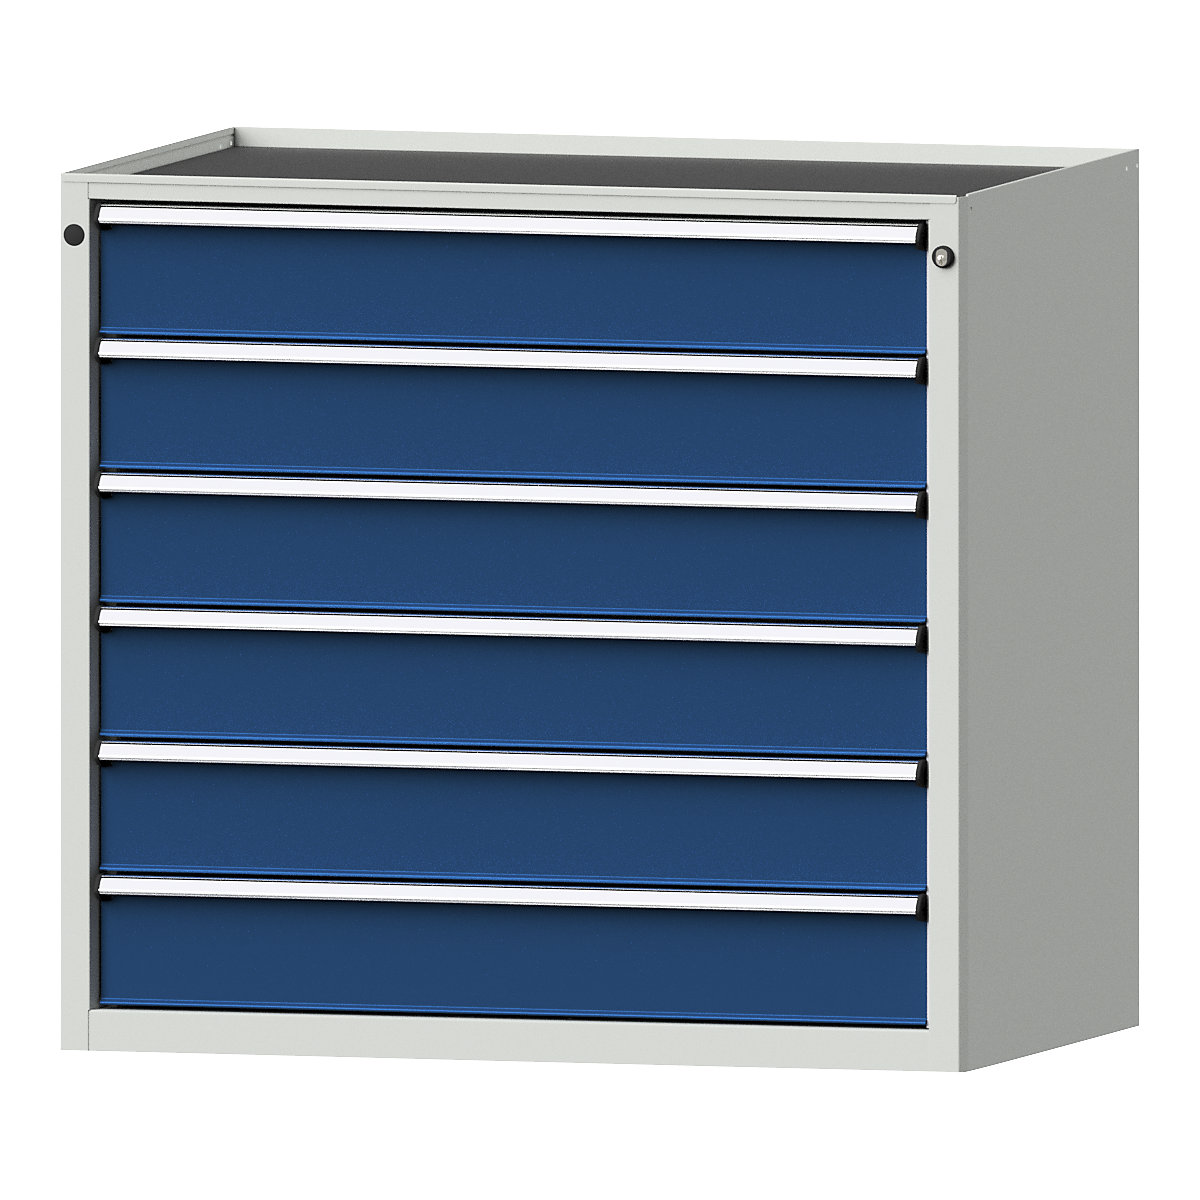 Armoire à tiroirs – ANKE, l x p 1060 x 675 mm, 6 tiroirs, hauteur 980 mm, façade bleu gentiane-5